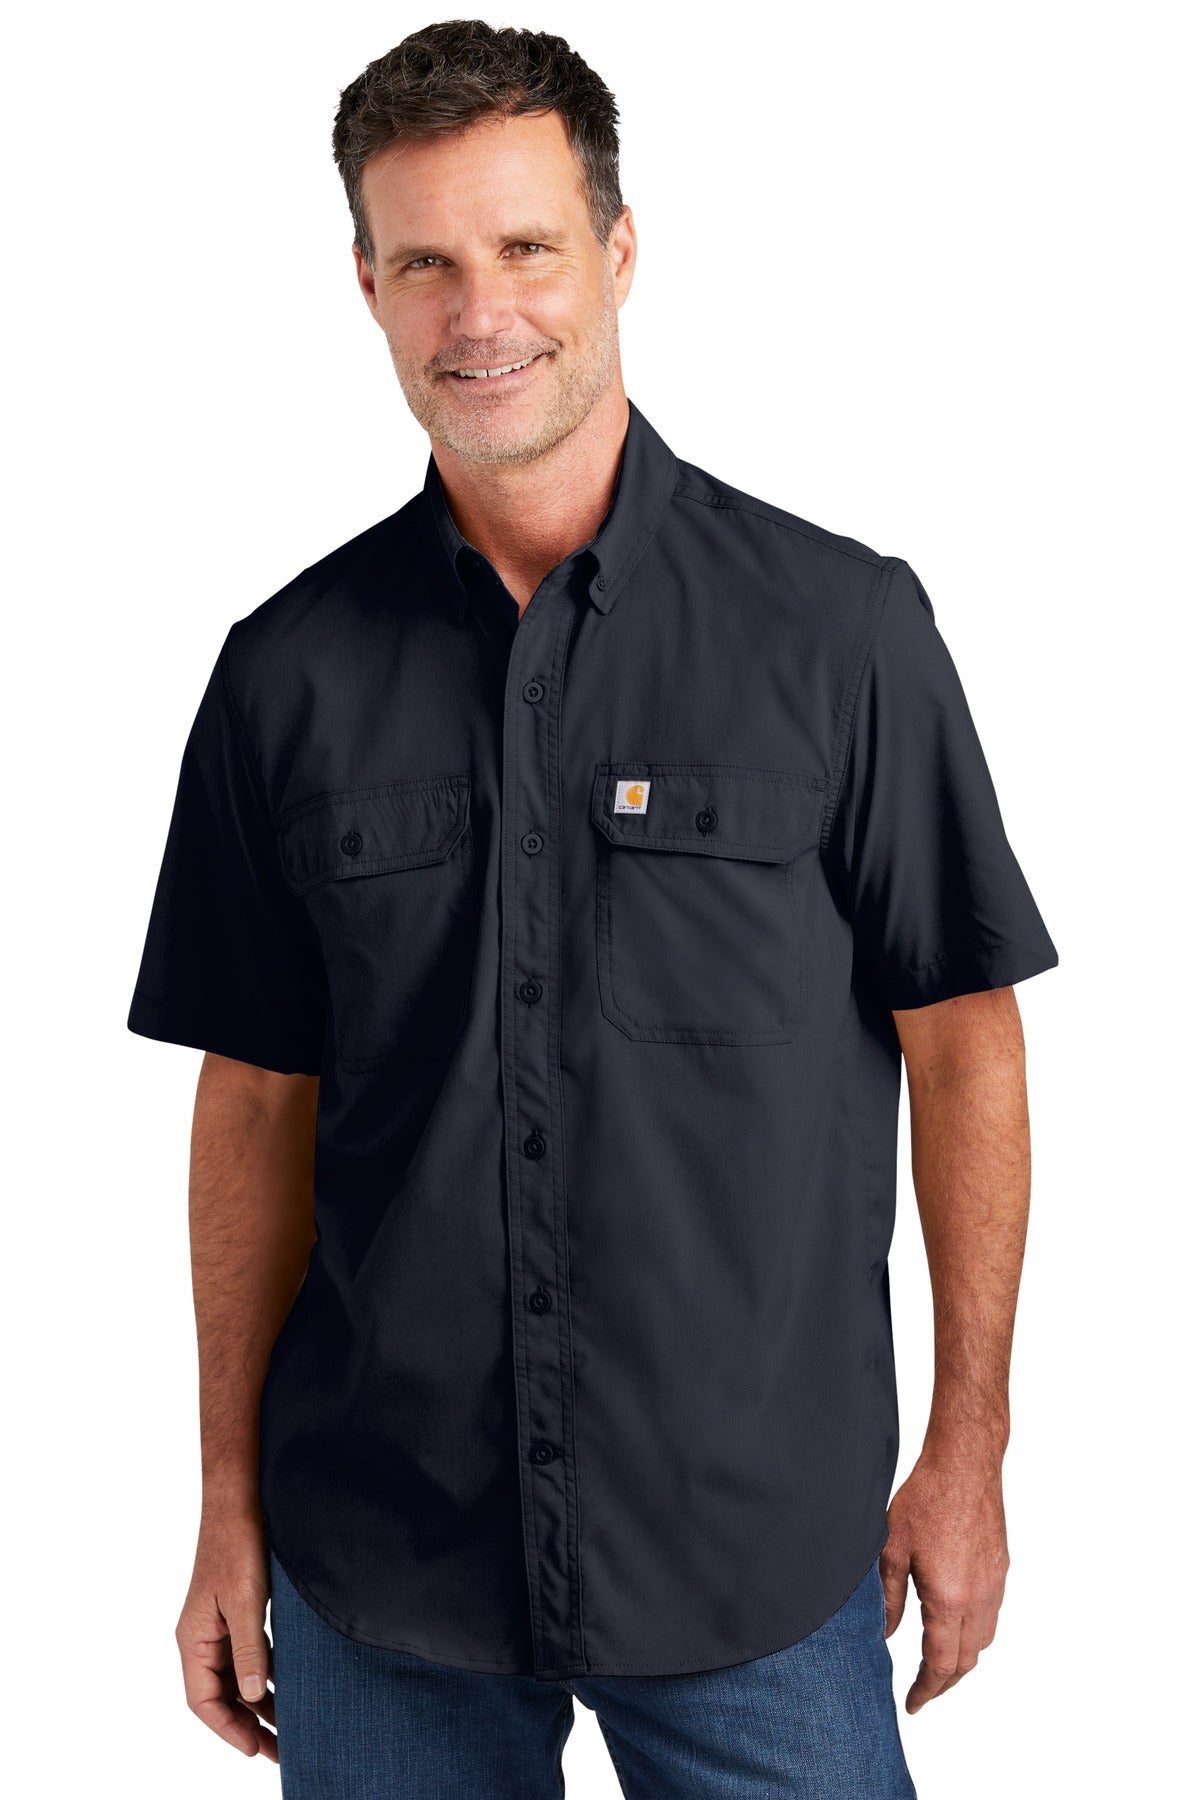 Carhartt Force® Solid Short Sleeve Shirt CT105292 - DFW Impression